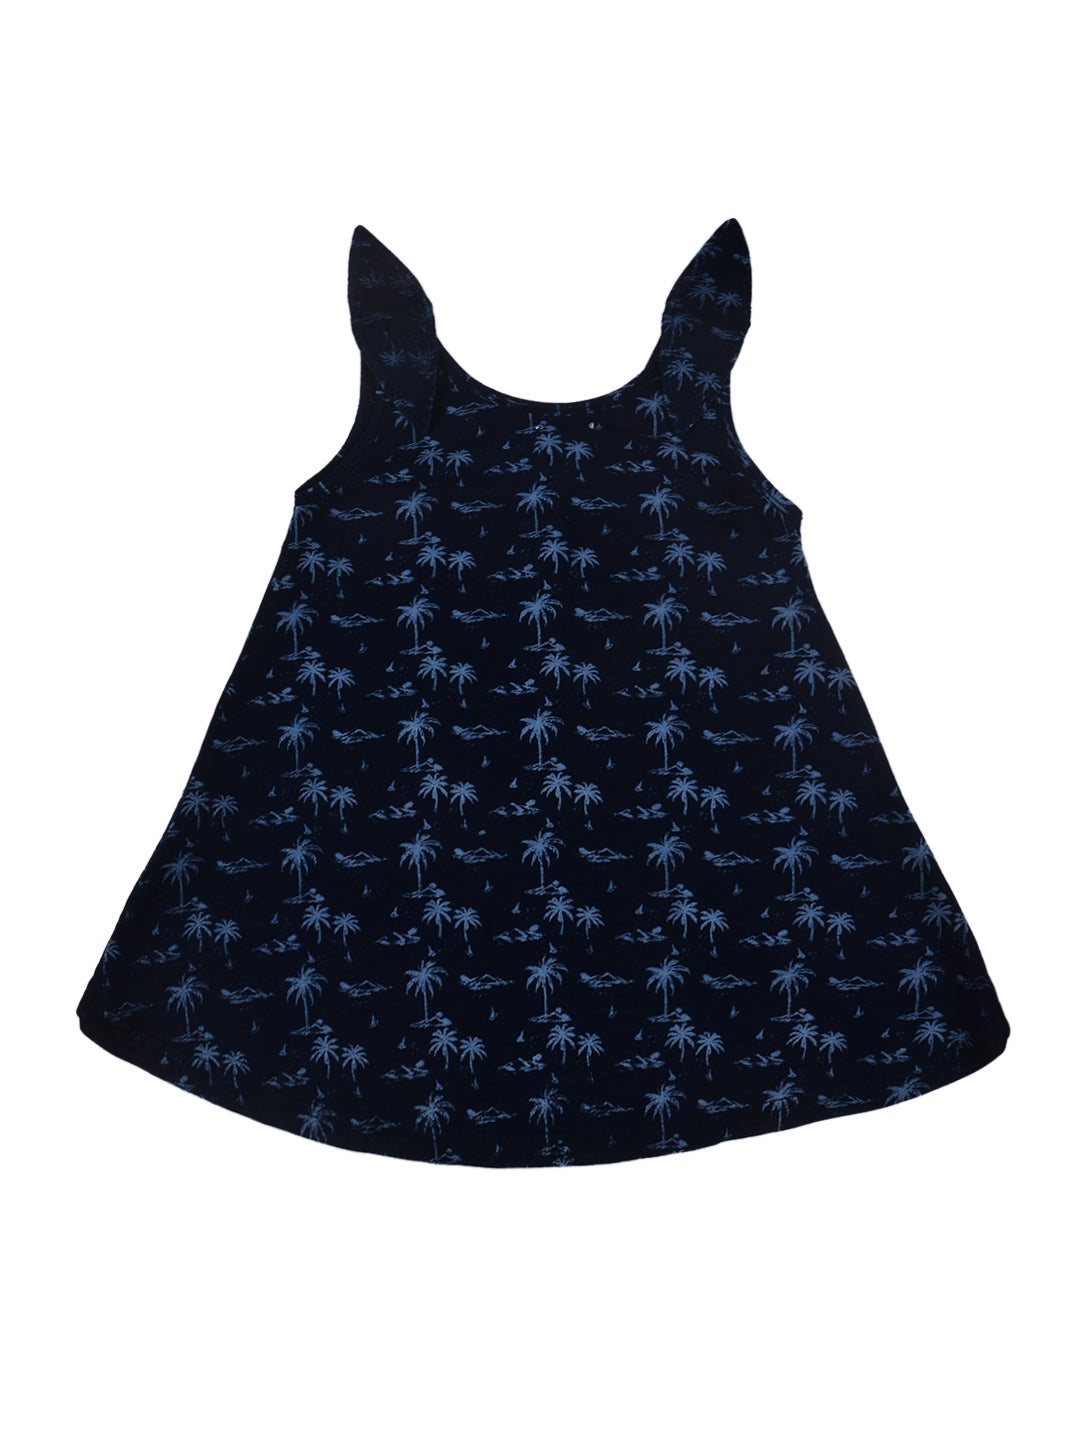 Girls Navy Blue Printed Cotton Knits Top